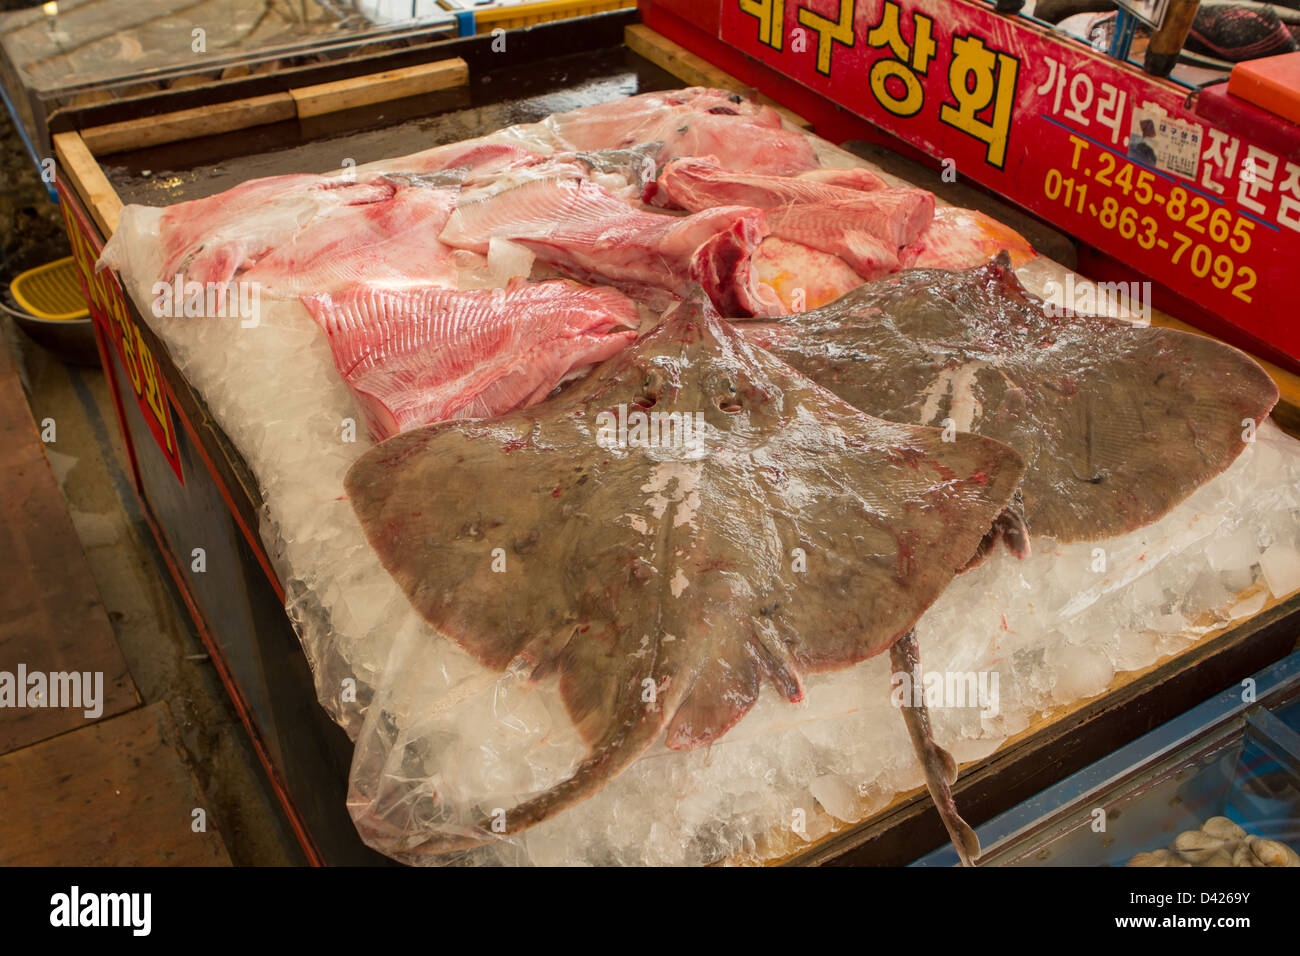 Rays at Jagalchi fish market, Busan, South Korea Stock Photo